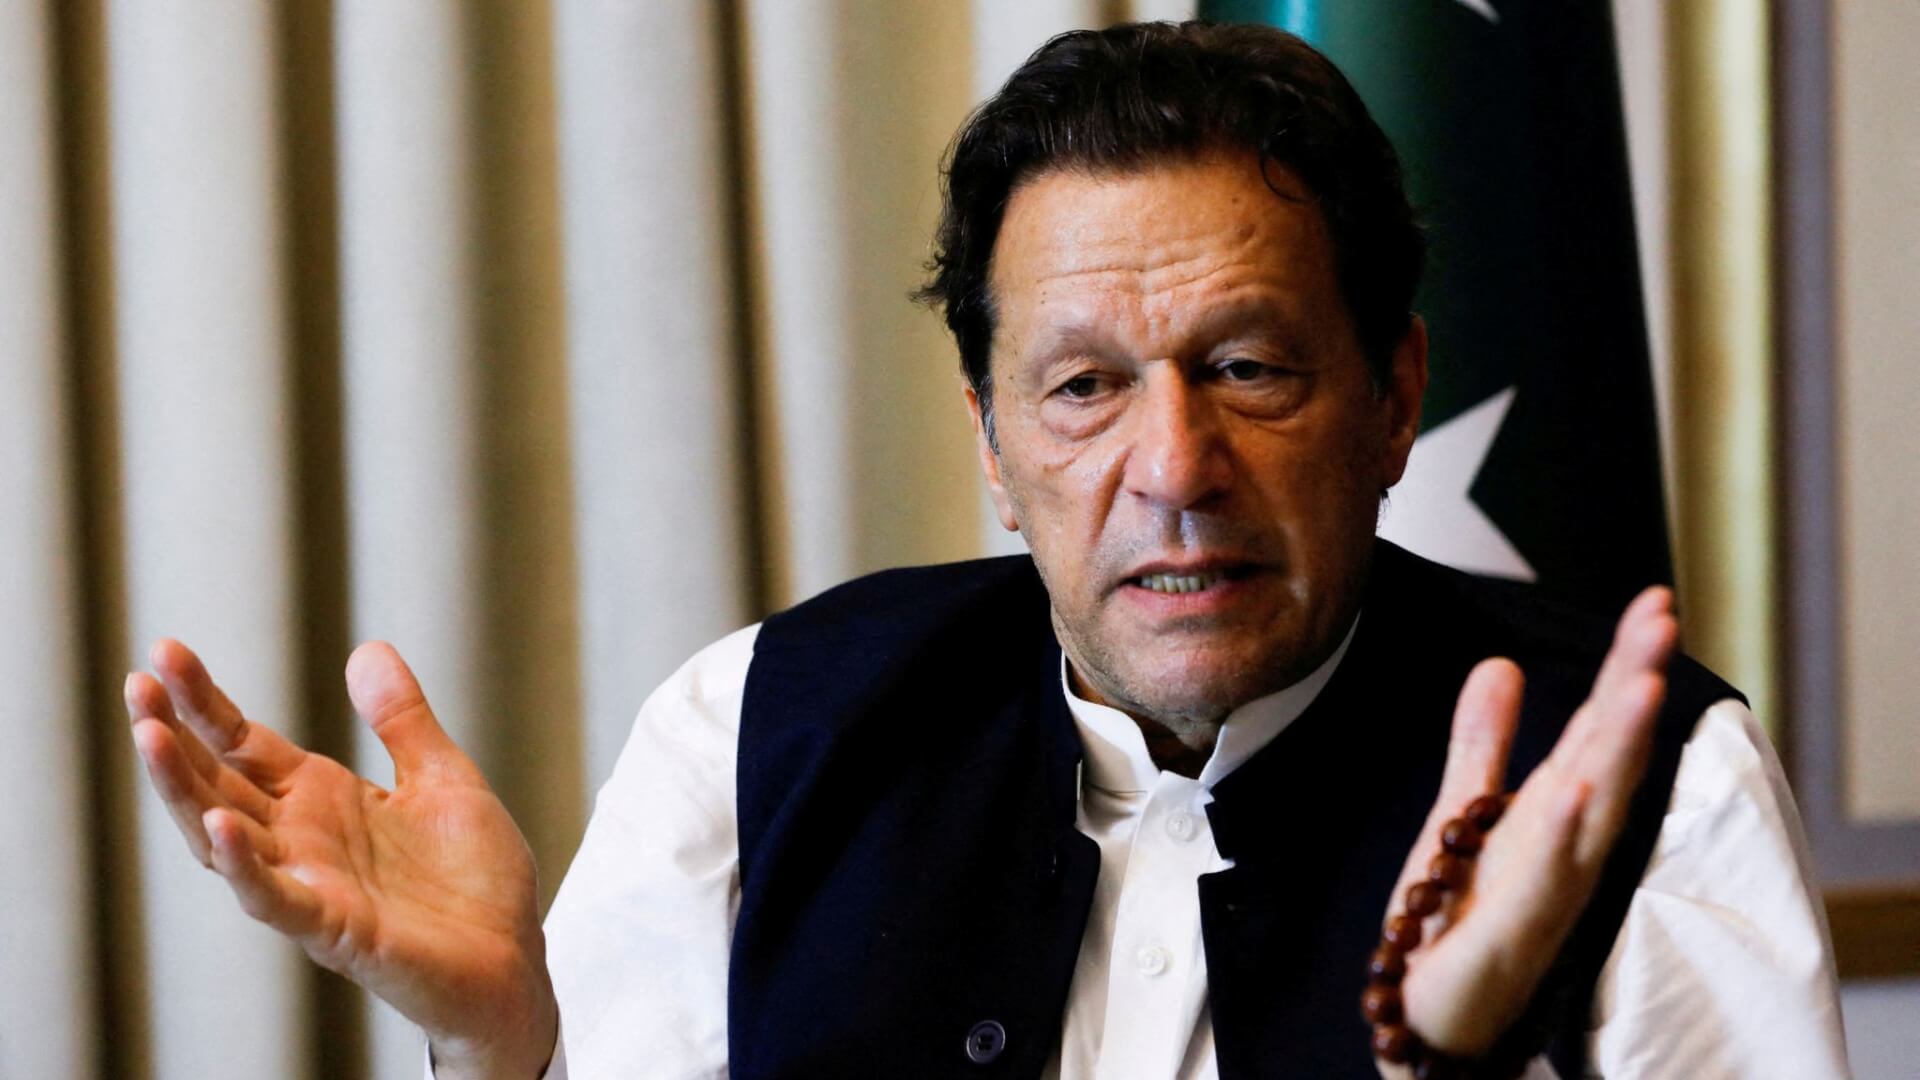 Leaked “Secret Cable” Reveals US Encouraged Pakistan to Oust Imran Khan, Threatened Isolation: The Intercept